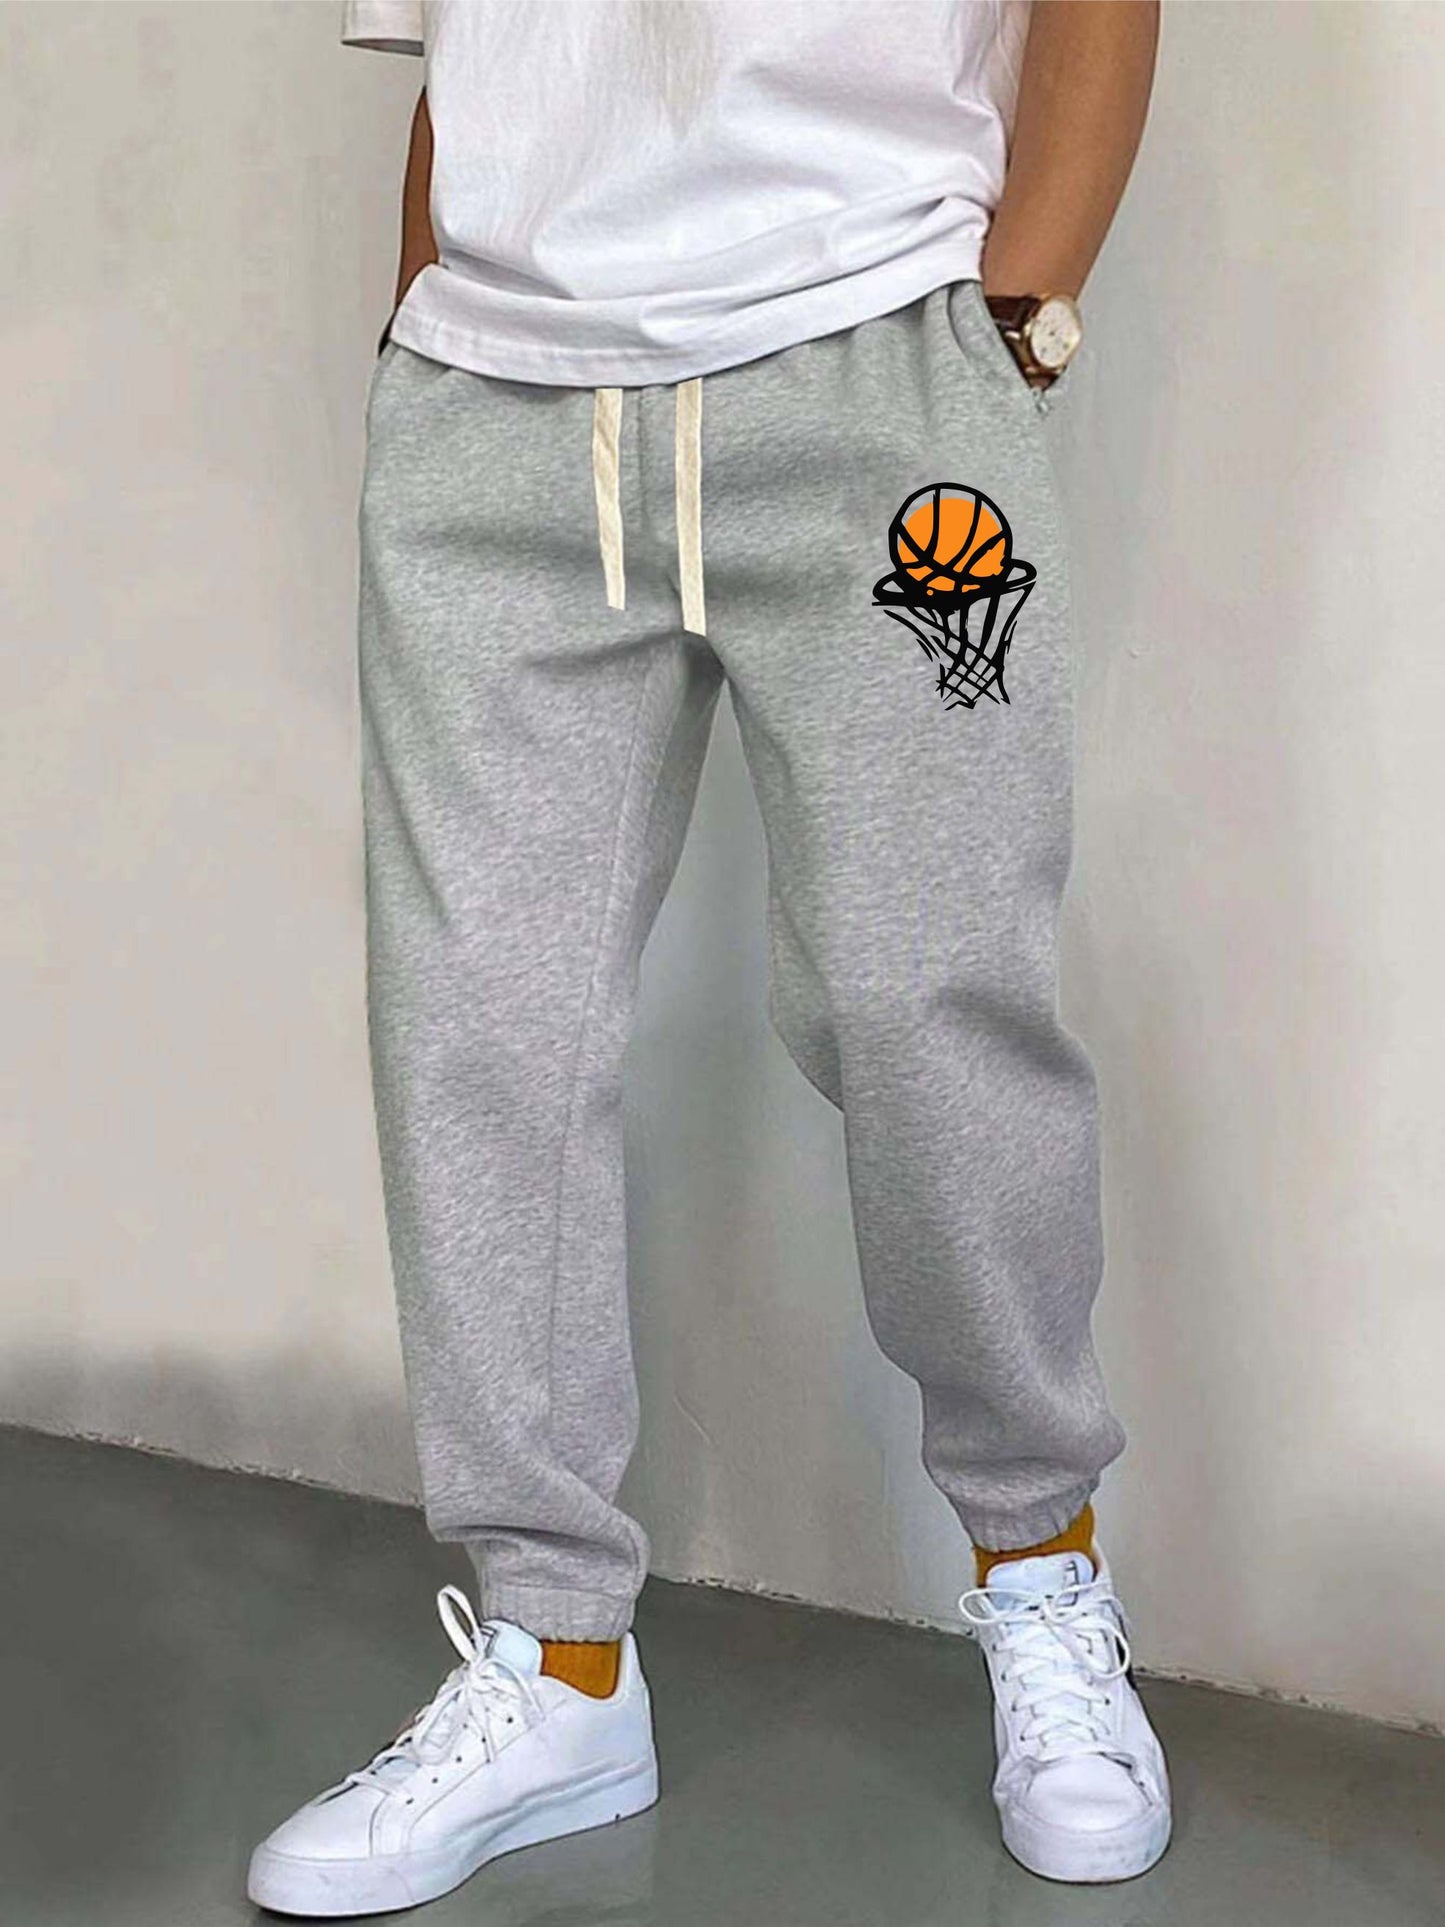 Men's Basketball Jogger Pants - Casual and Comfy with Drawstring and Pockets